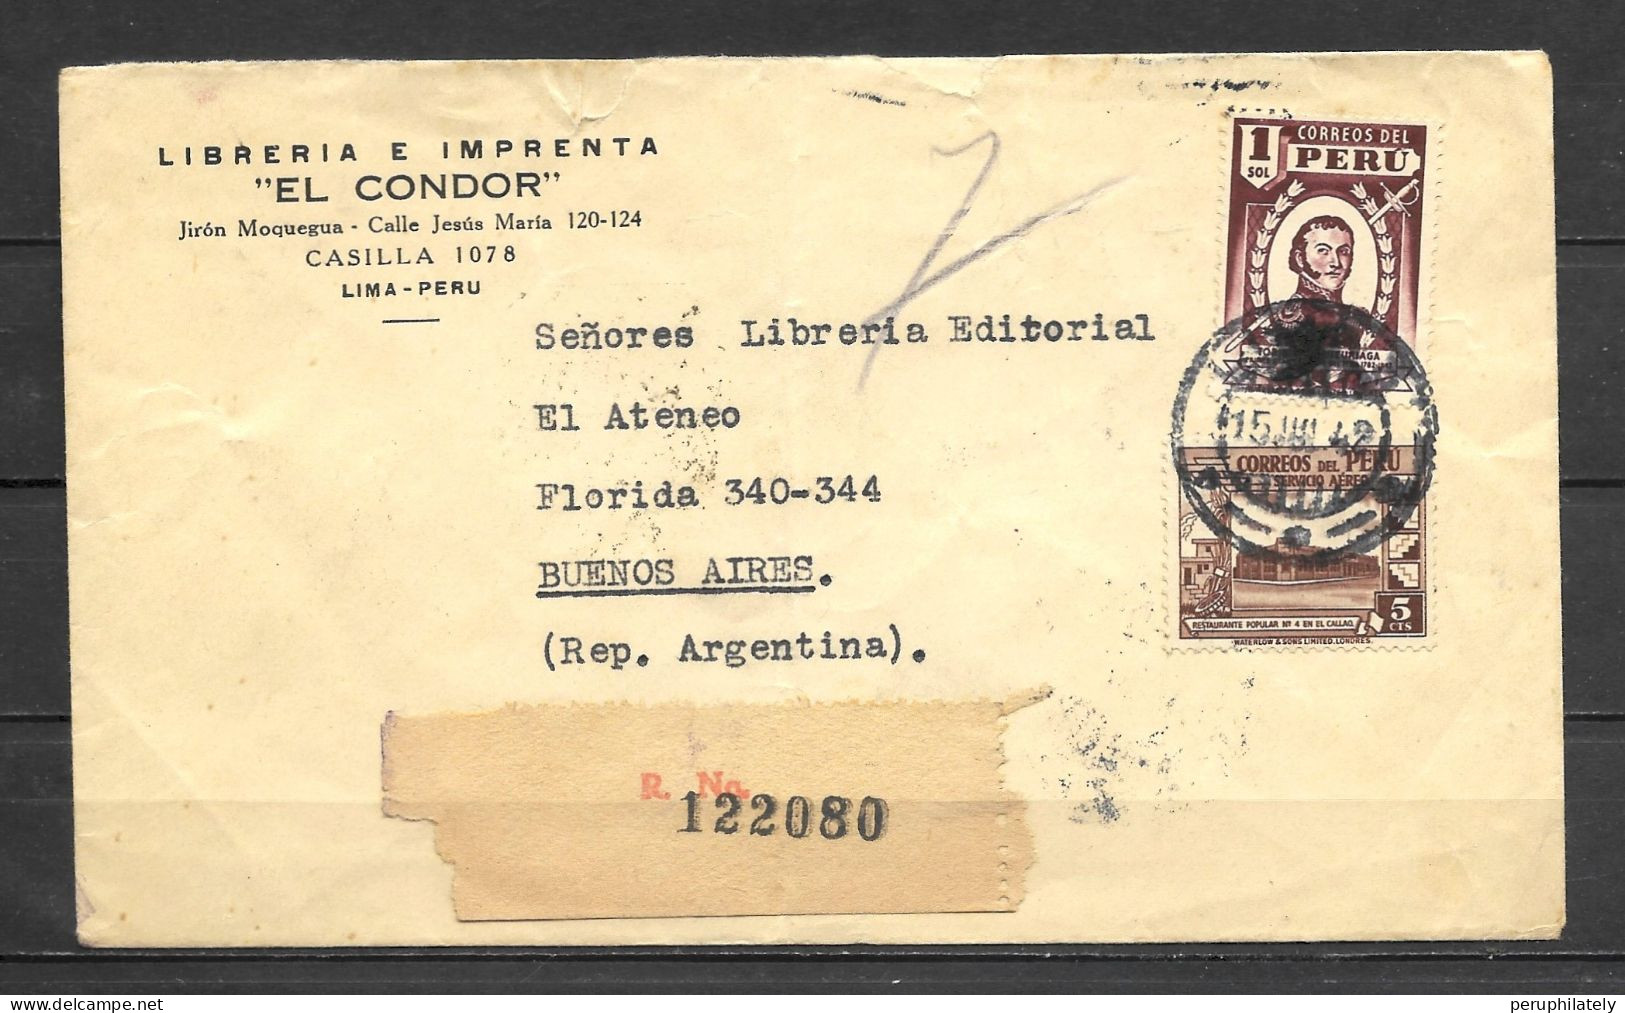 Peru Registered Cover , Libreria El Condor Sent To Argentina - Peru